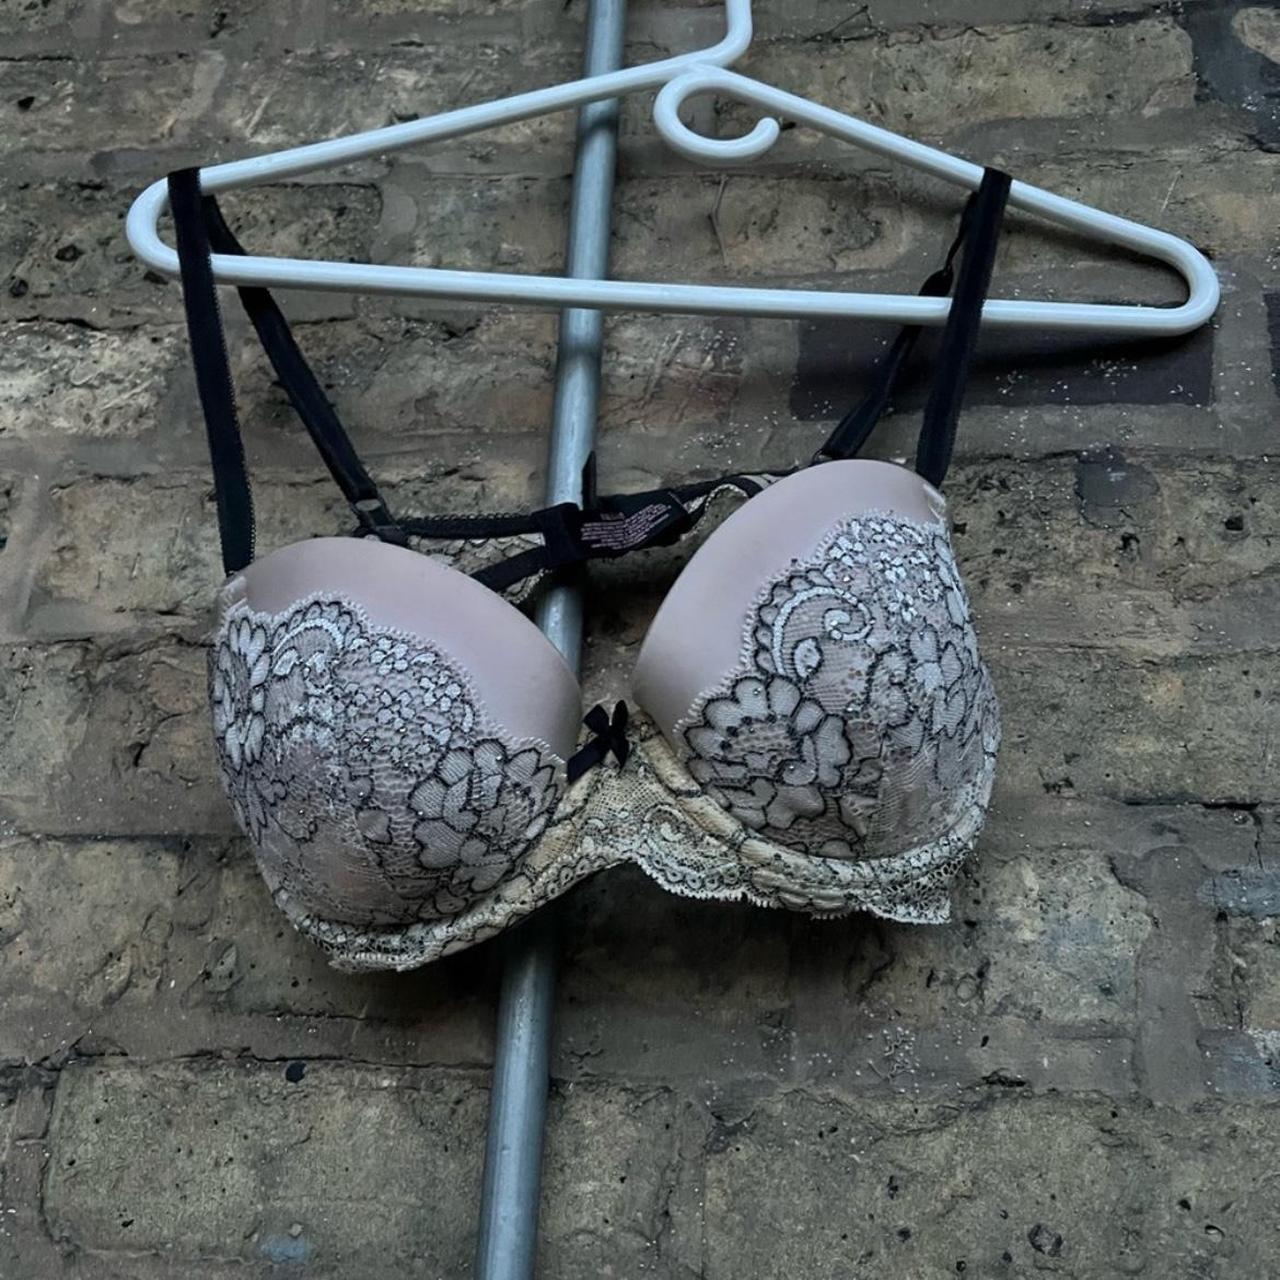 Selling Victoria's Secret diamond bra and suspended - Depop